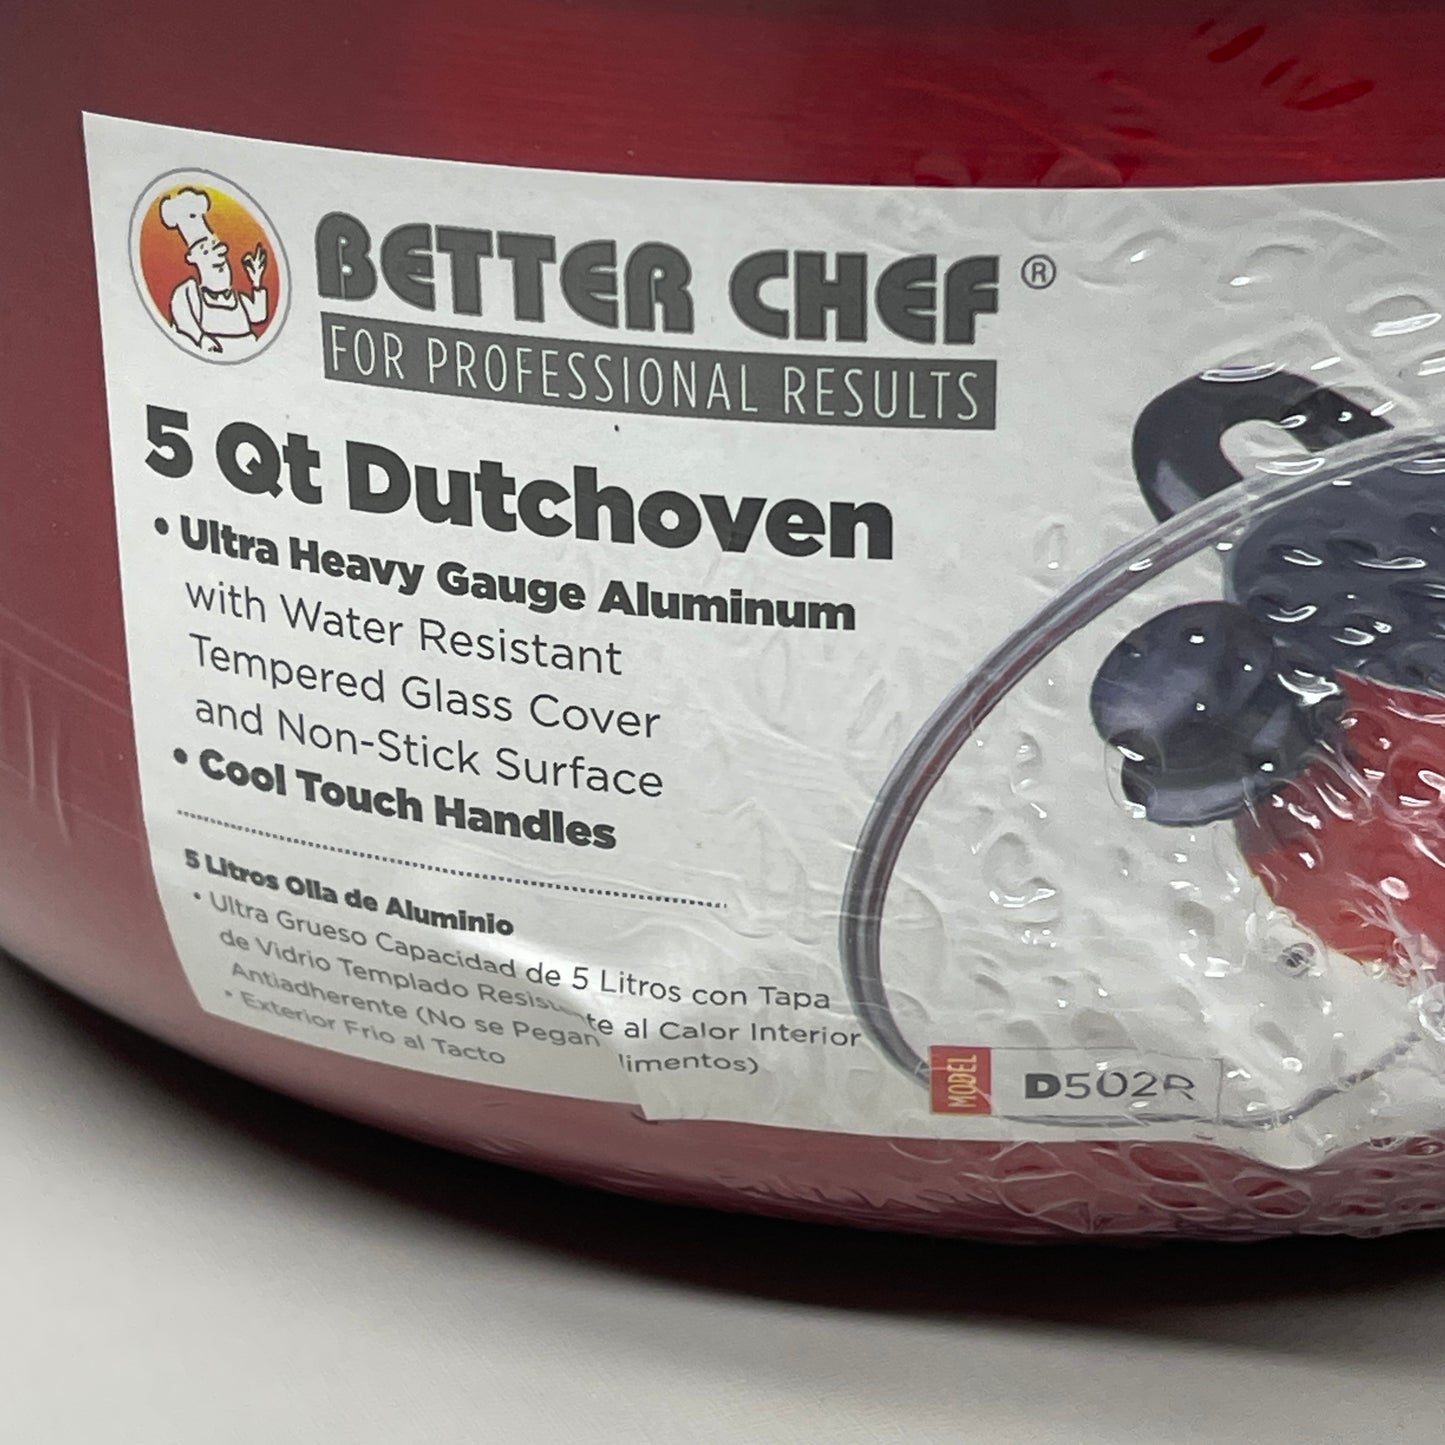 BETTER CHEF 5 Qt Dutchoven Pan & Lid 9" Non-Stick Coated Aluminum Red D502R (New)